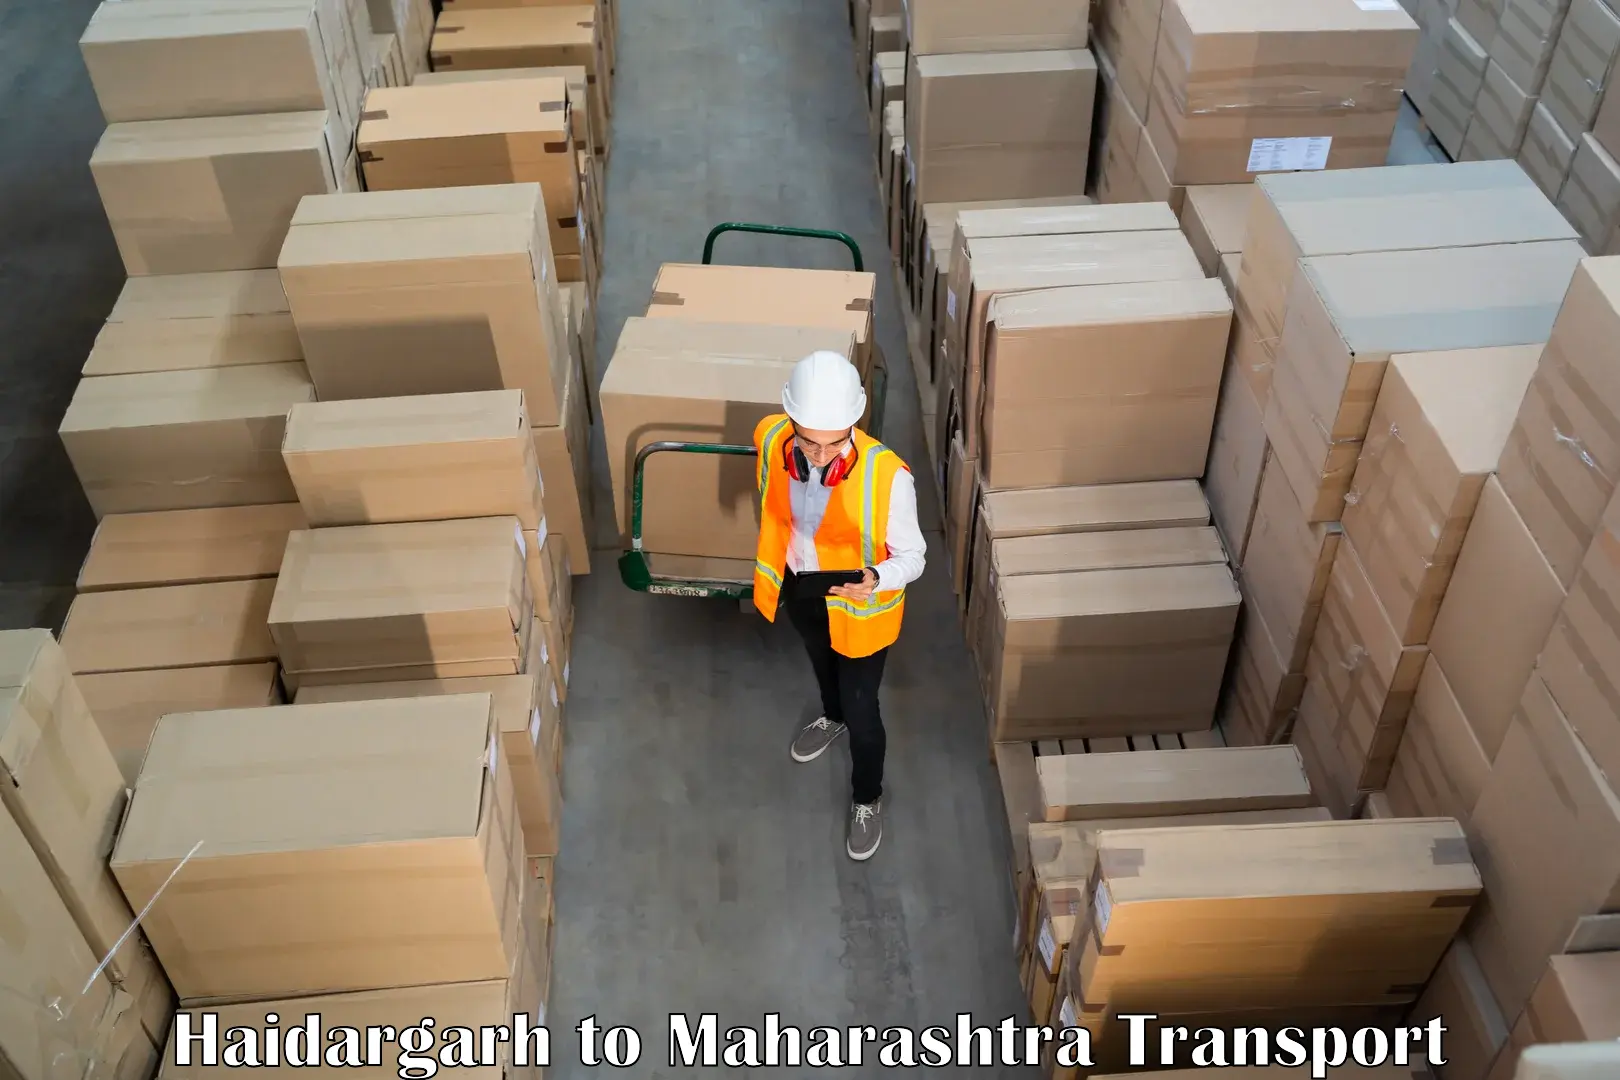 Air cargo transport services in Haidargarh to Khandala Pune